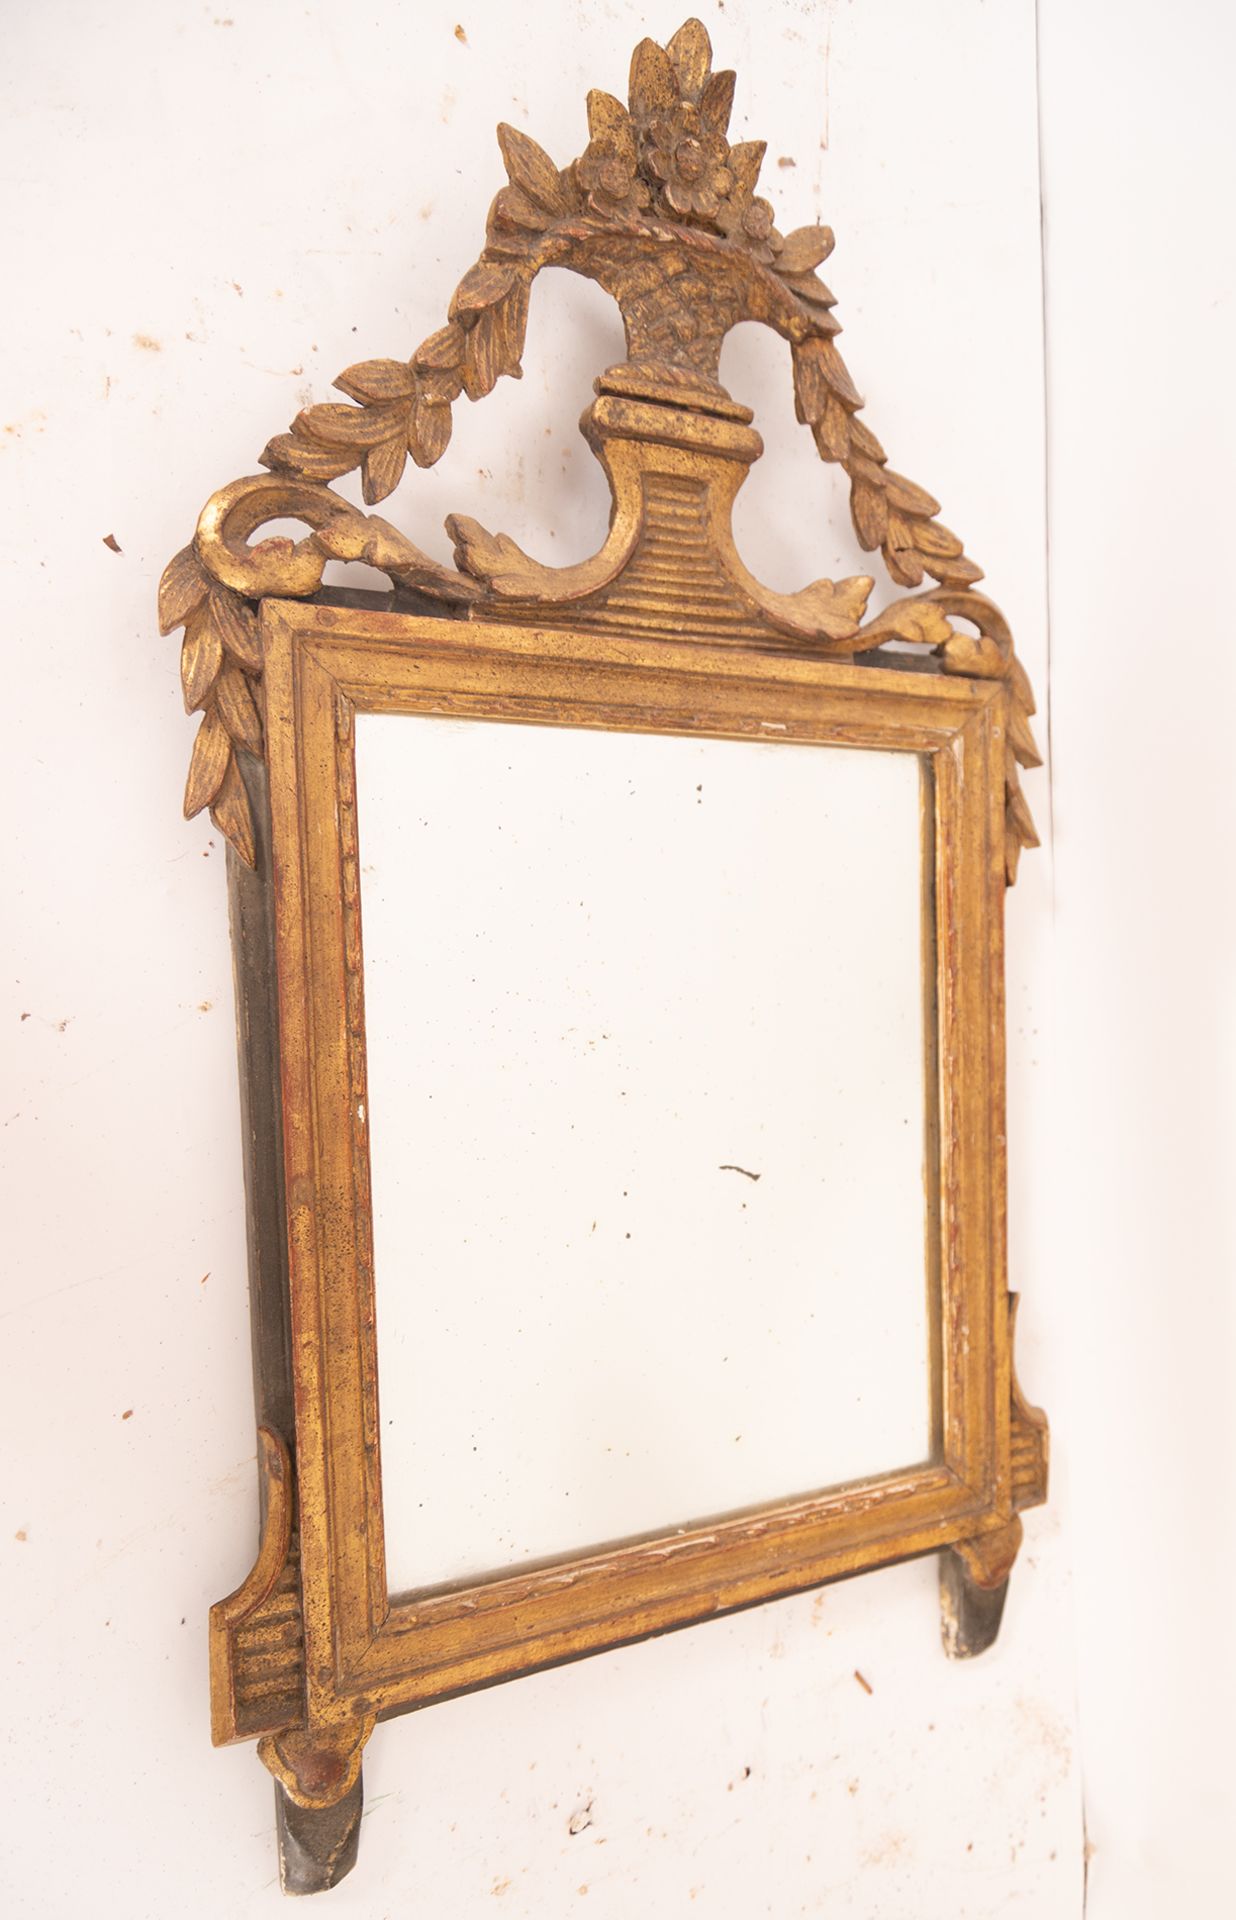 French Louis XVI Style Mirror, 18th century French school